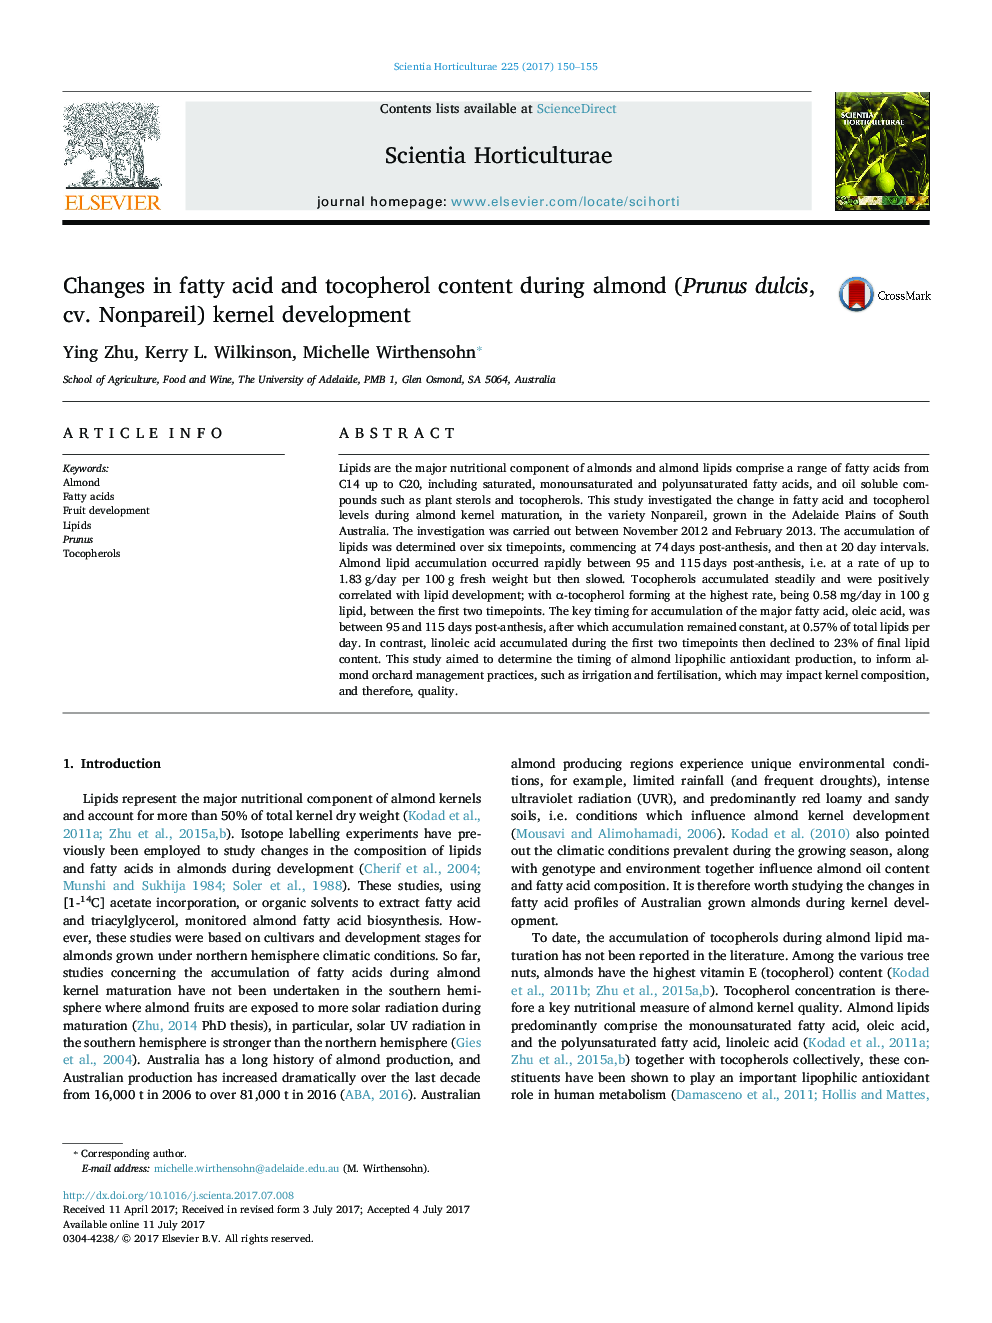 Changes in fatty acid and tocopherol content during almond (Prunus dulcis, cv. Nonpareil) kernel development